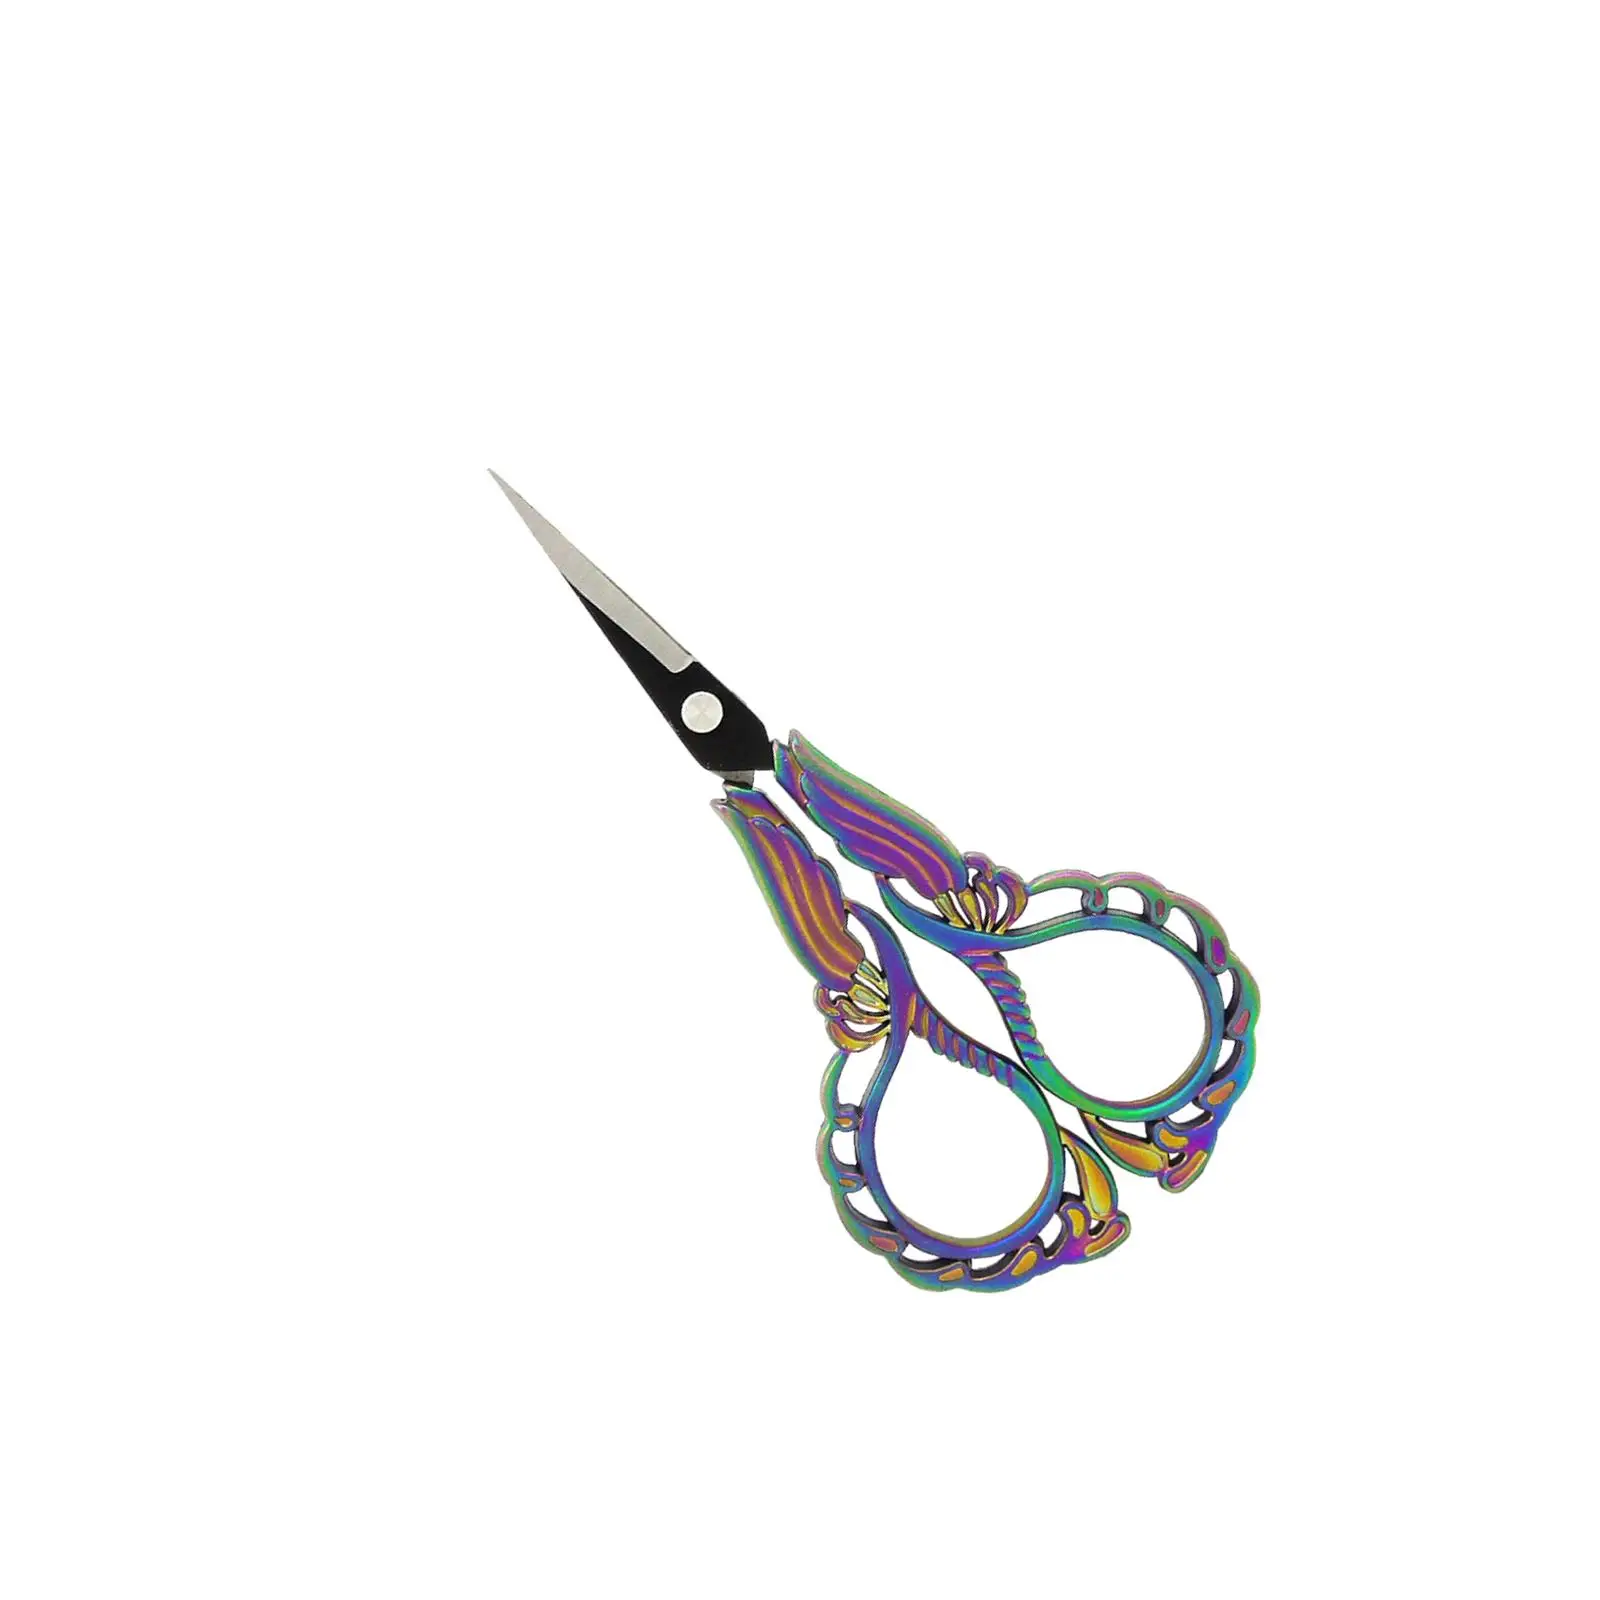 Embroidery Scissors Orchid Scissors for Needlework Dressmaking Artwork